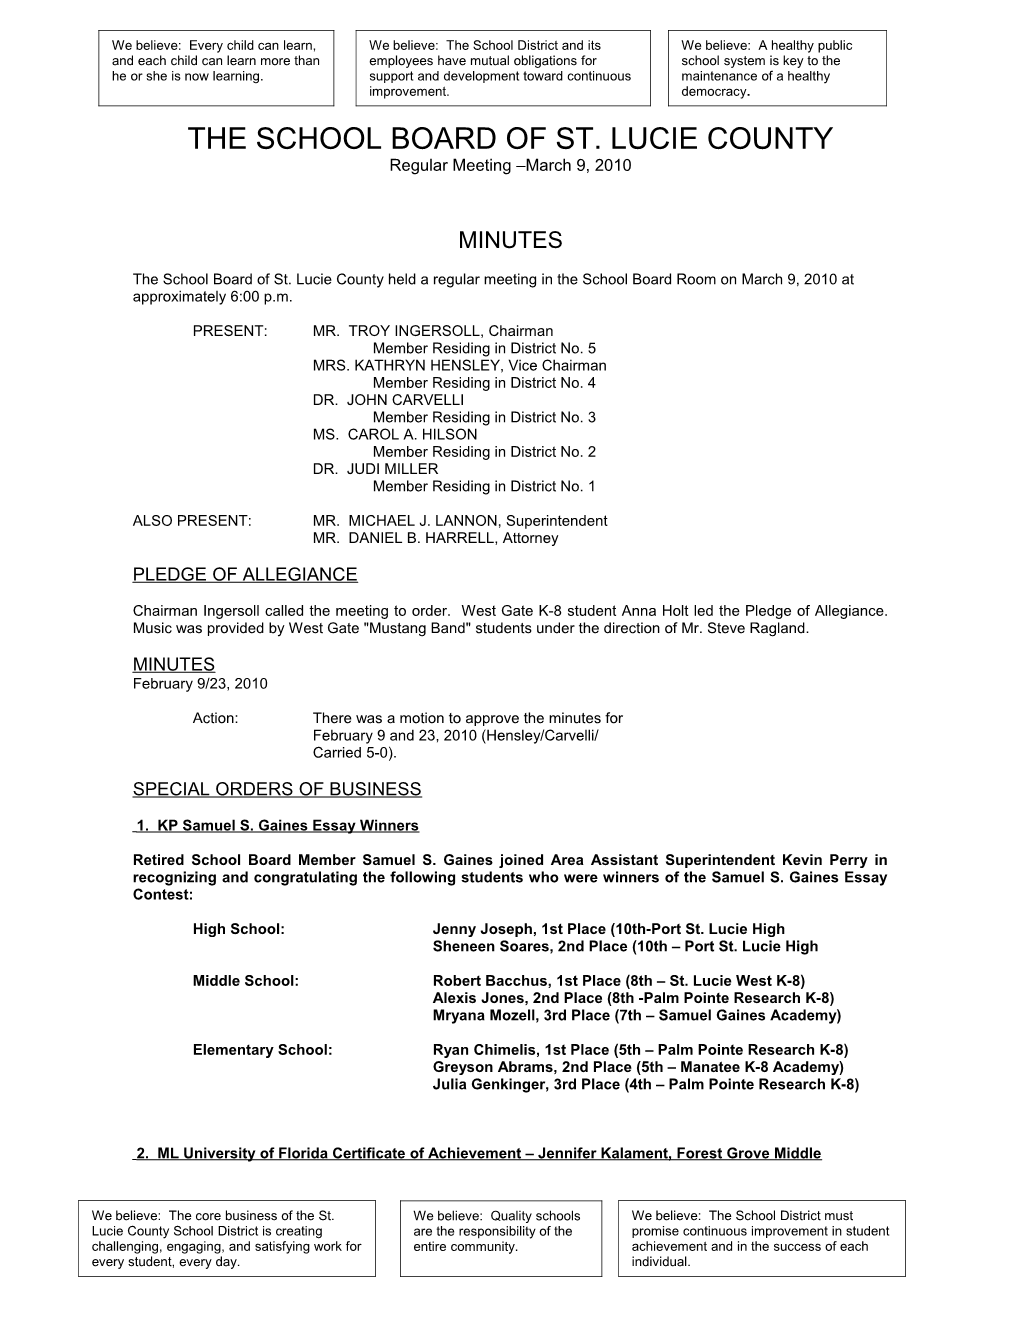 03-09-10 SLCSB Regular Meeting Minutes